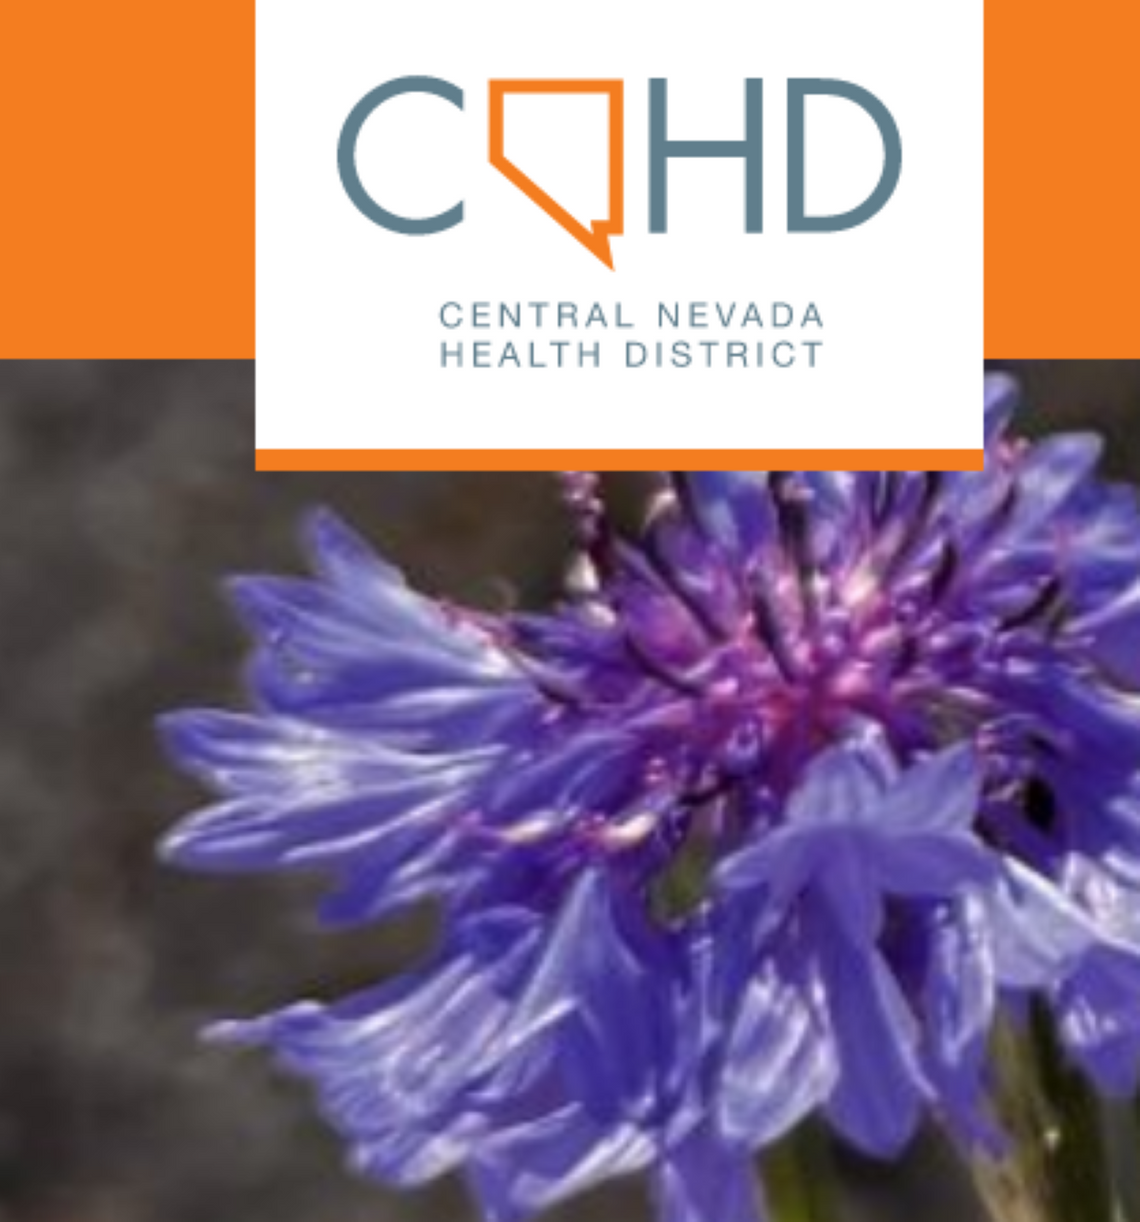 Key Developments in Central Nevada Health District Progress